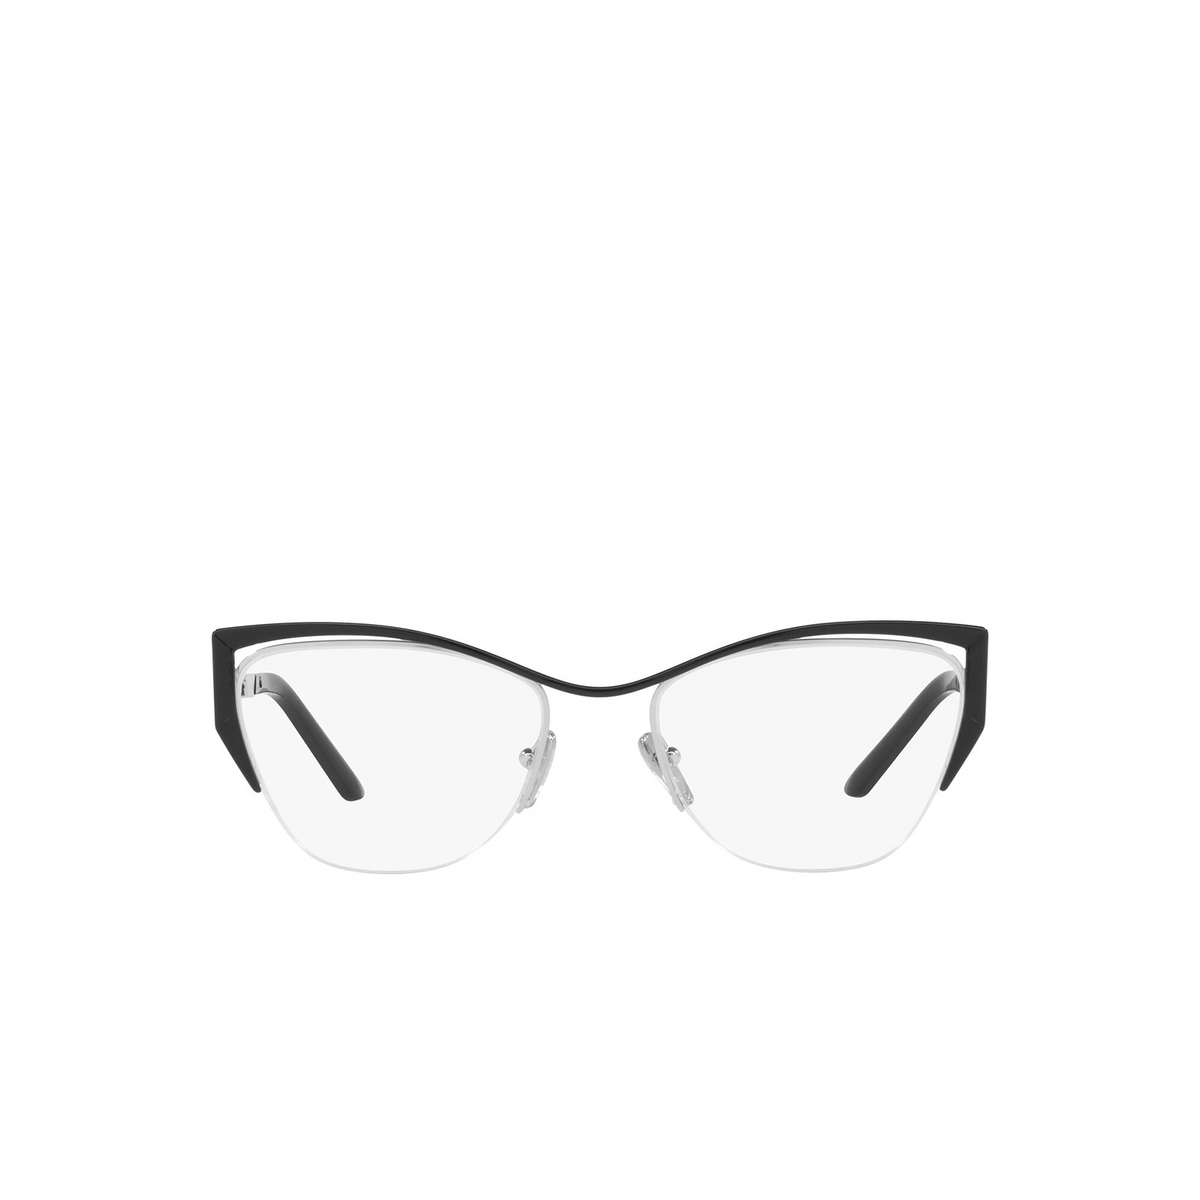 Prada® Butterfly Eyeglasses: PR 63YV color Silver / Black GAQ1O1 - front view.